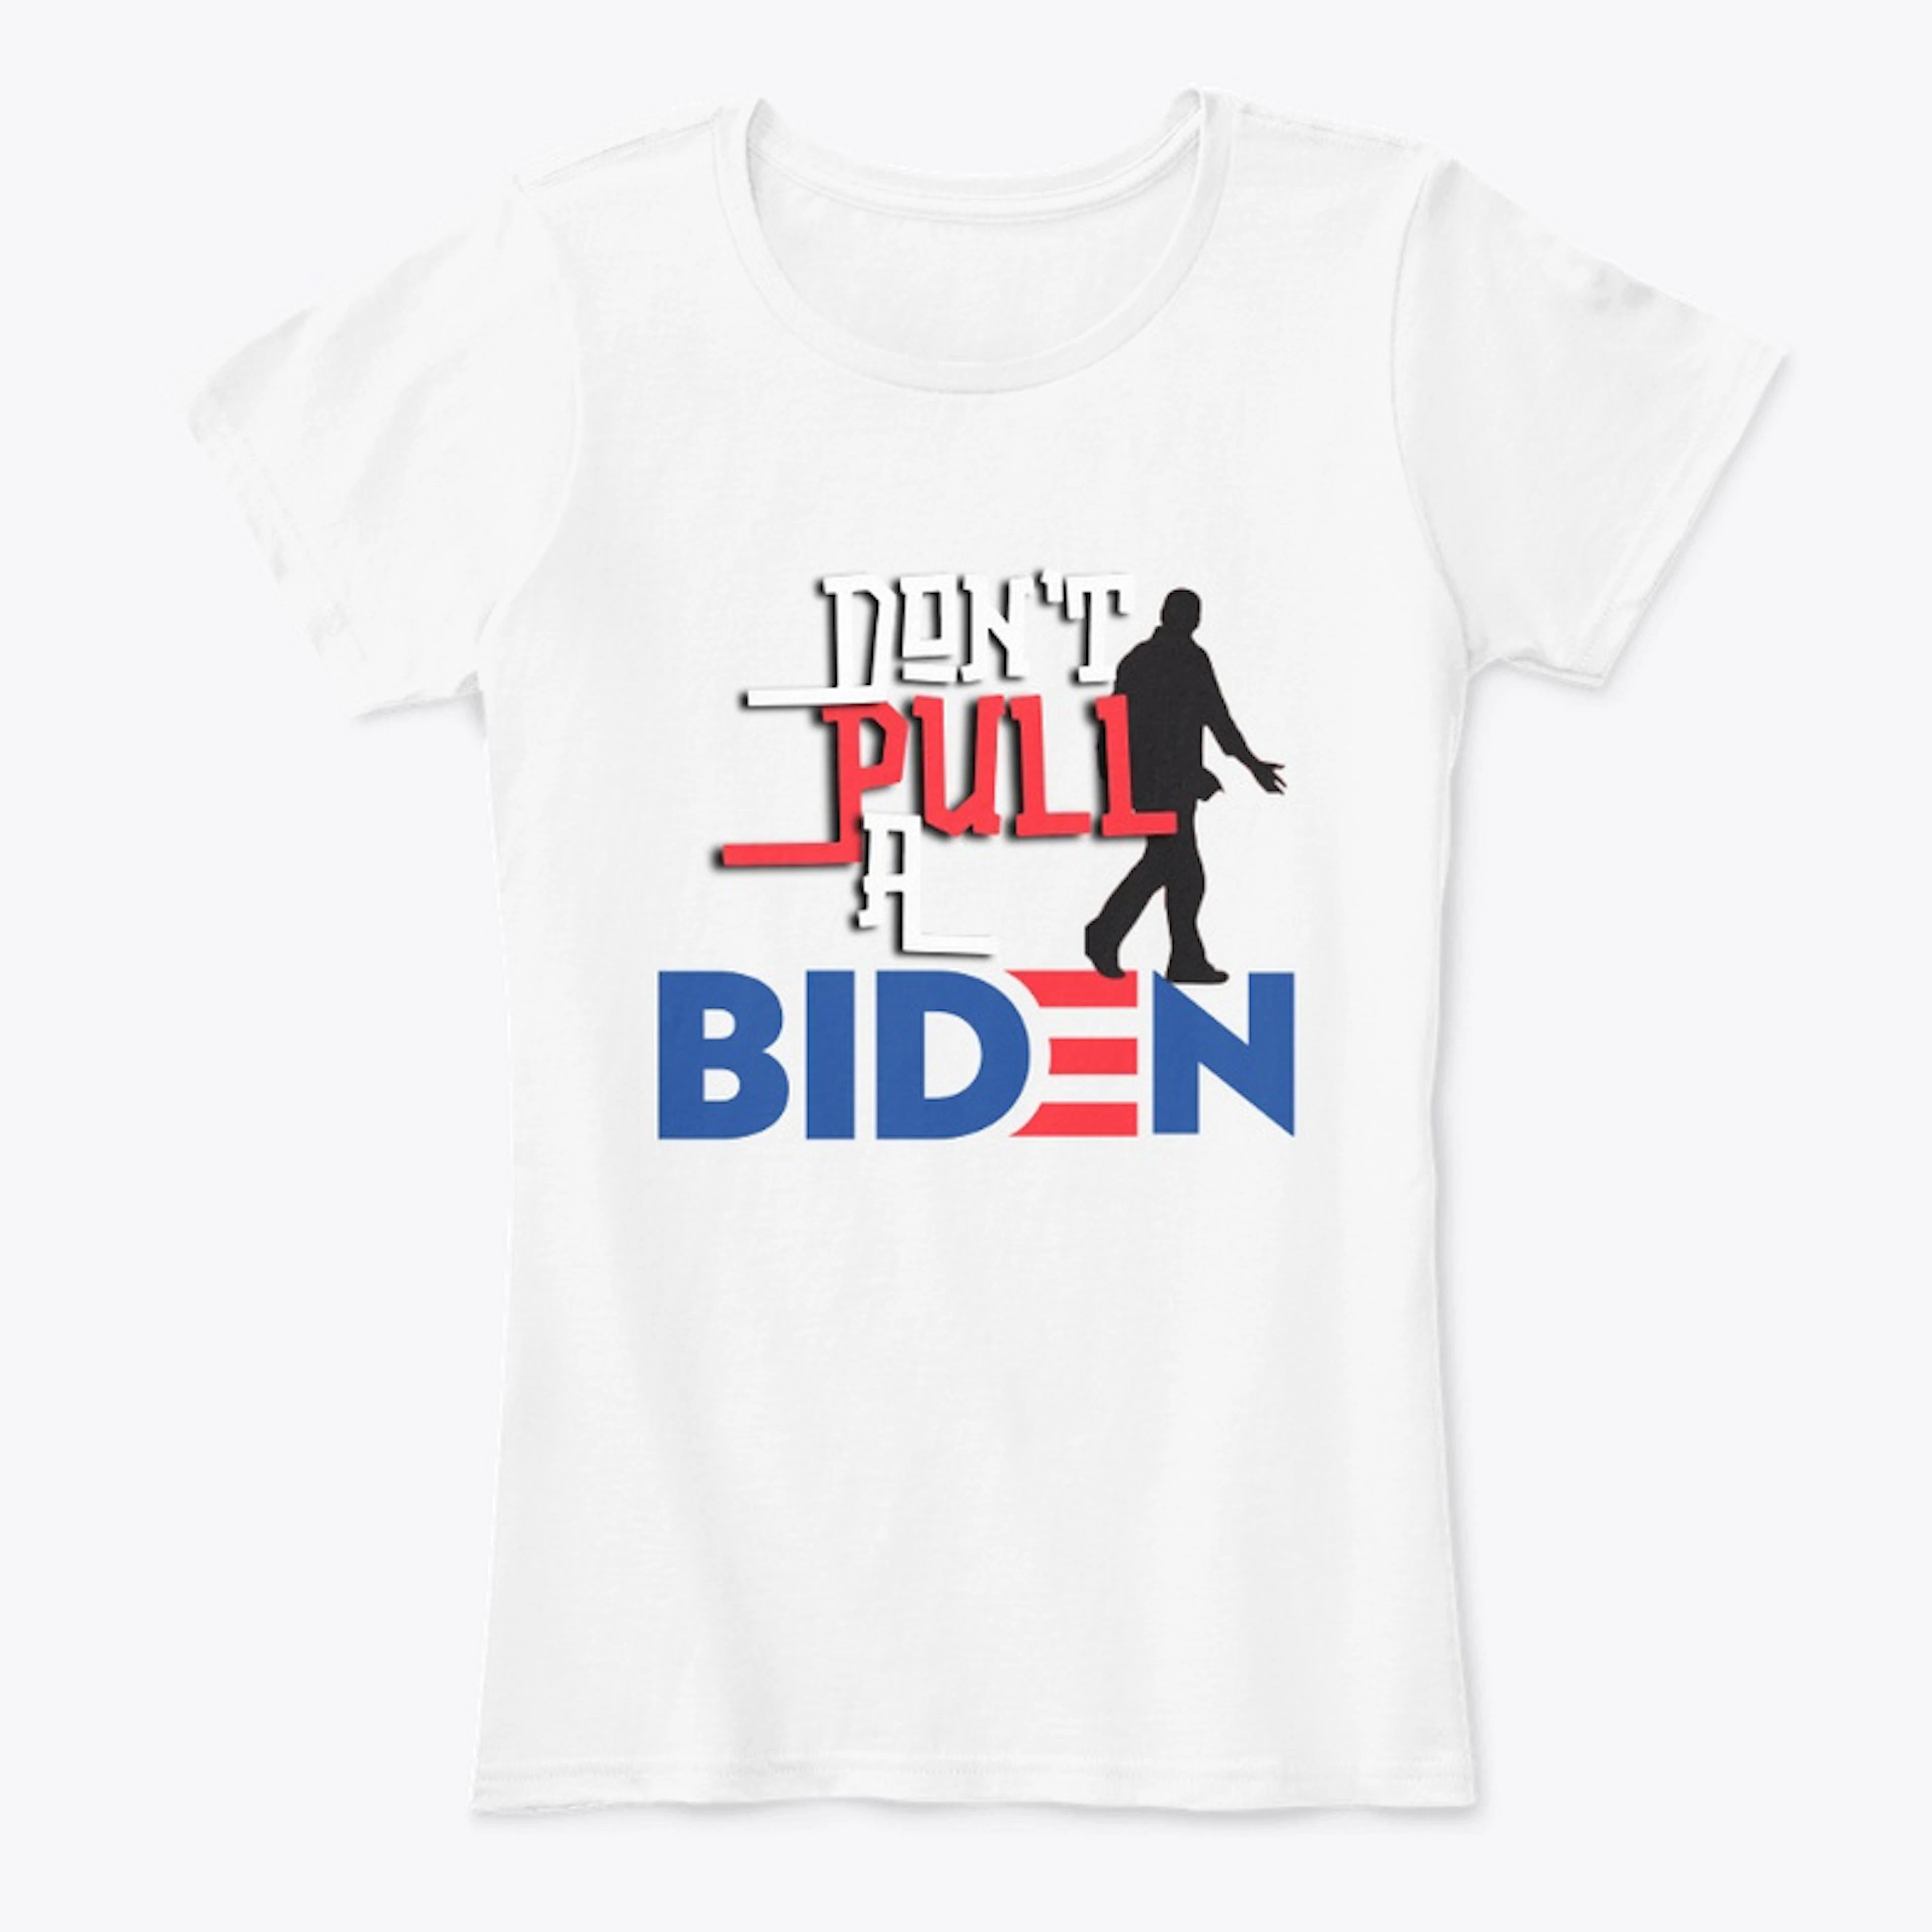 "Don't Pull a Biden"